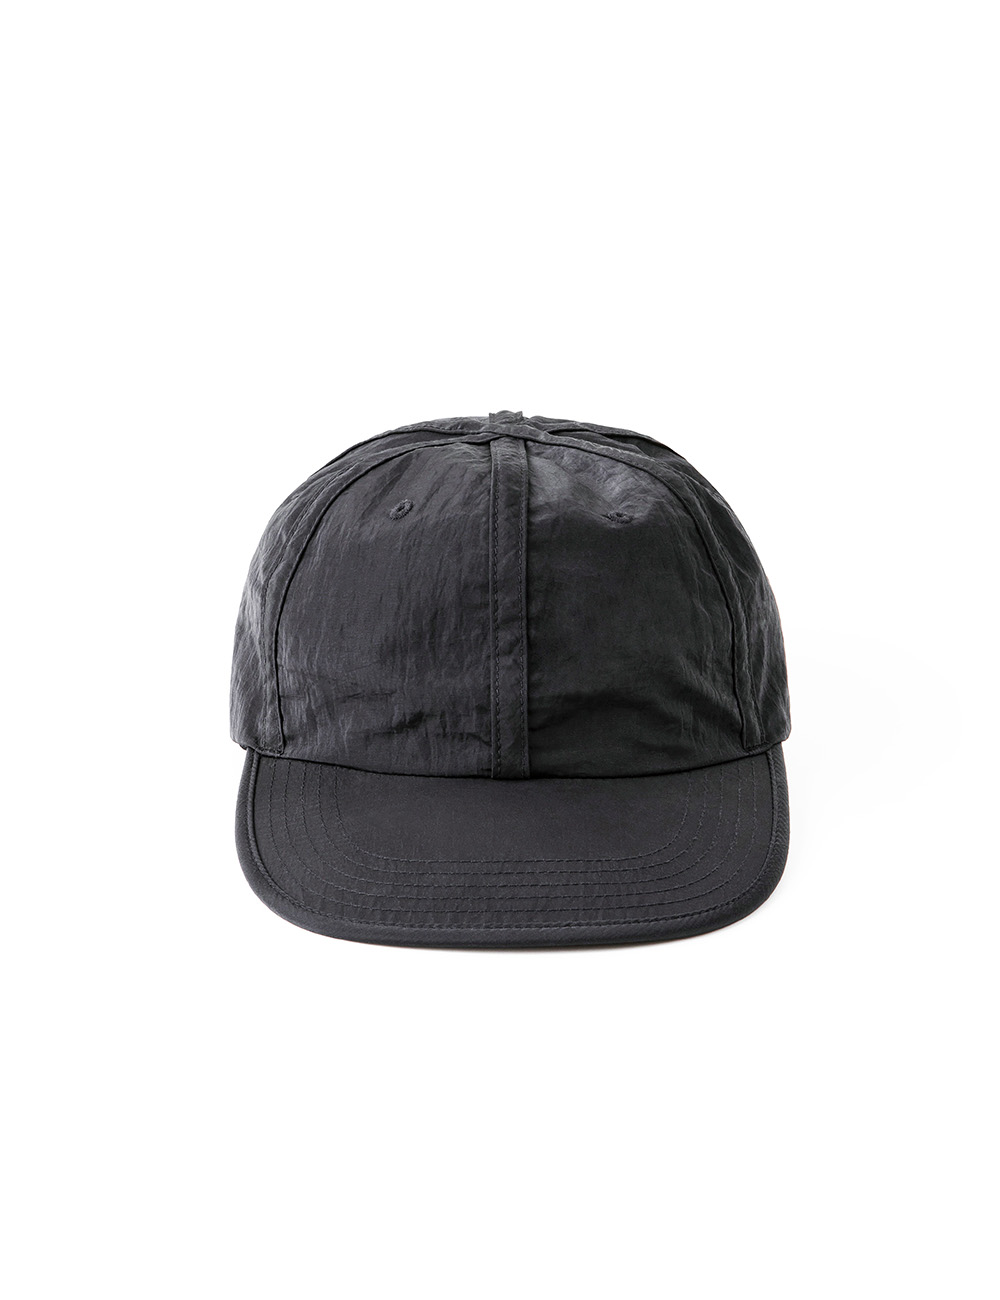 METALLIC BALL CAP (BLACK)